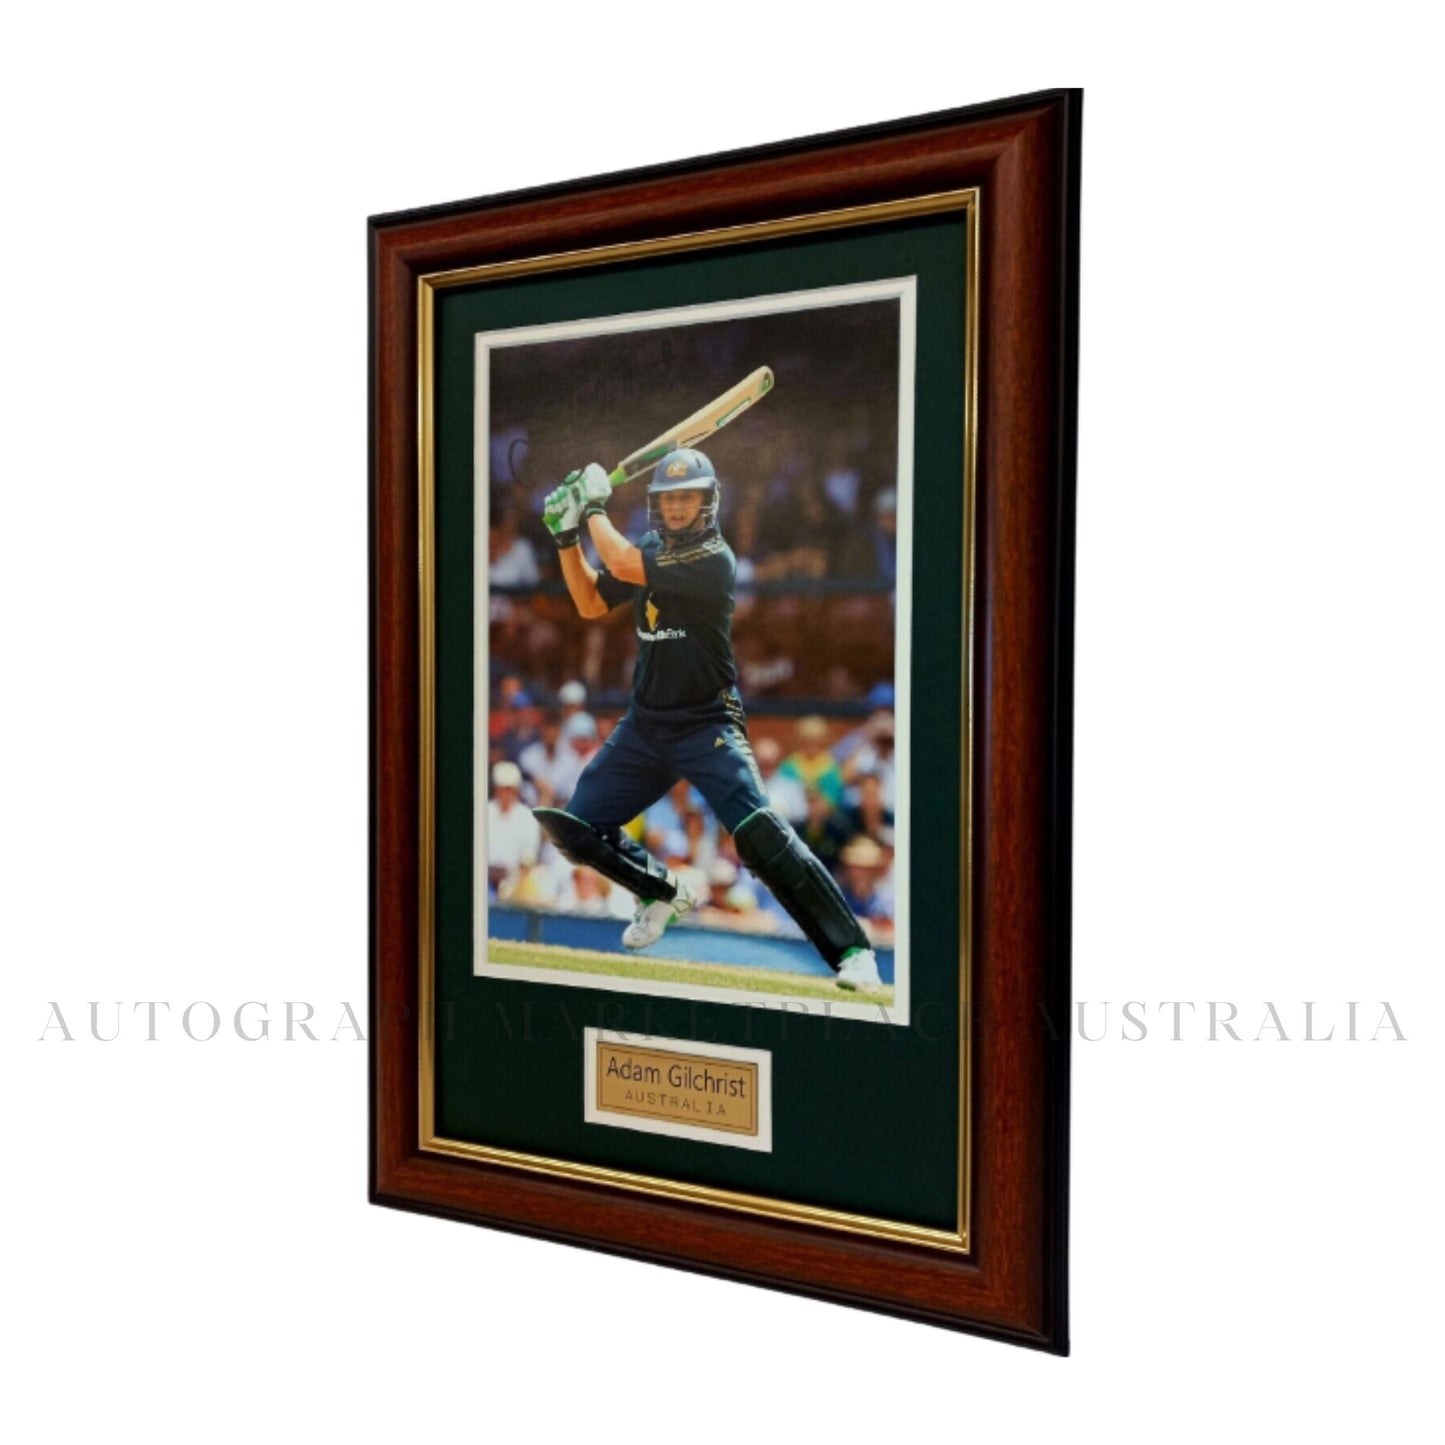 Autographed Adam Gilchrist Action Photo in Framed Cricket Australia Memorabilia 